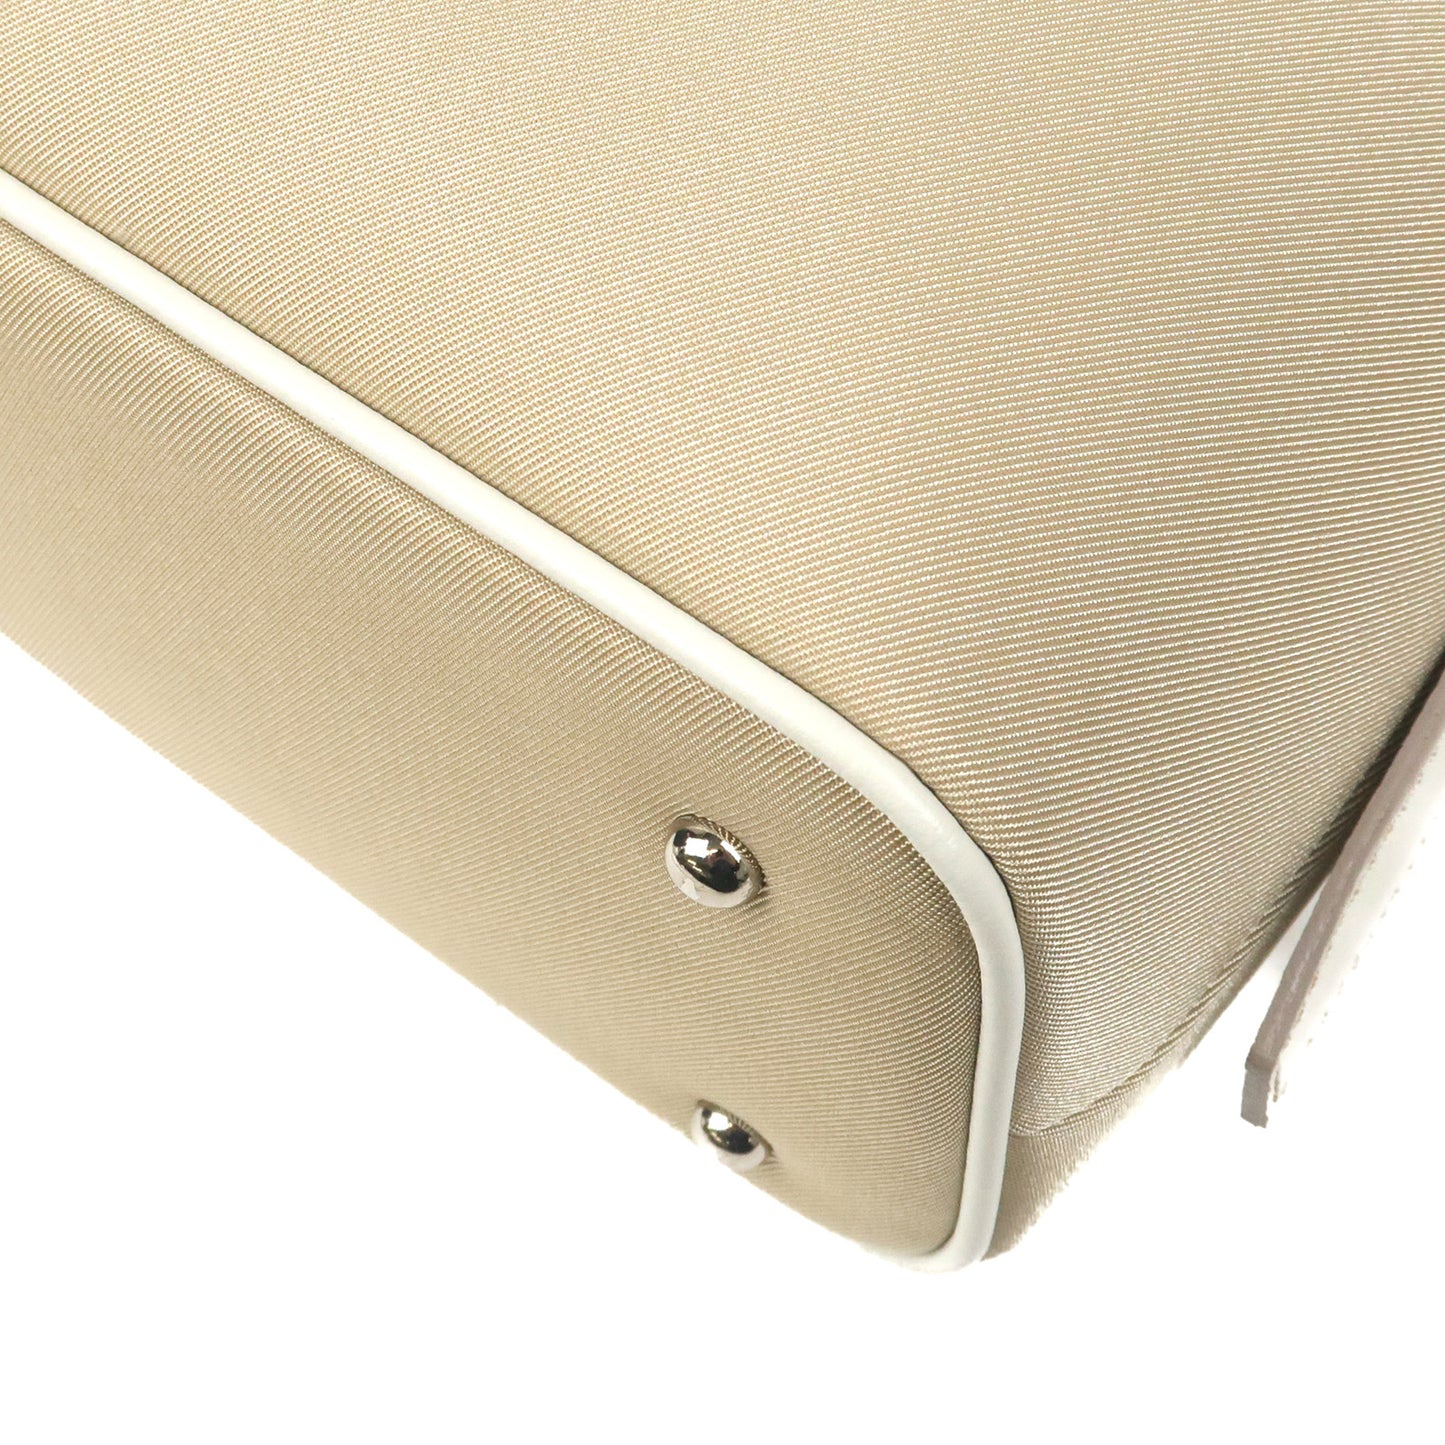 BURBERRY Nova Plaid Canvas Leather Shoulder Bag Beige White